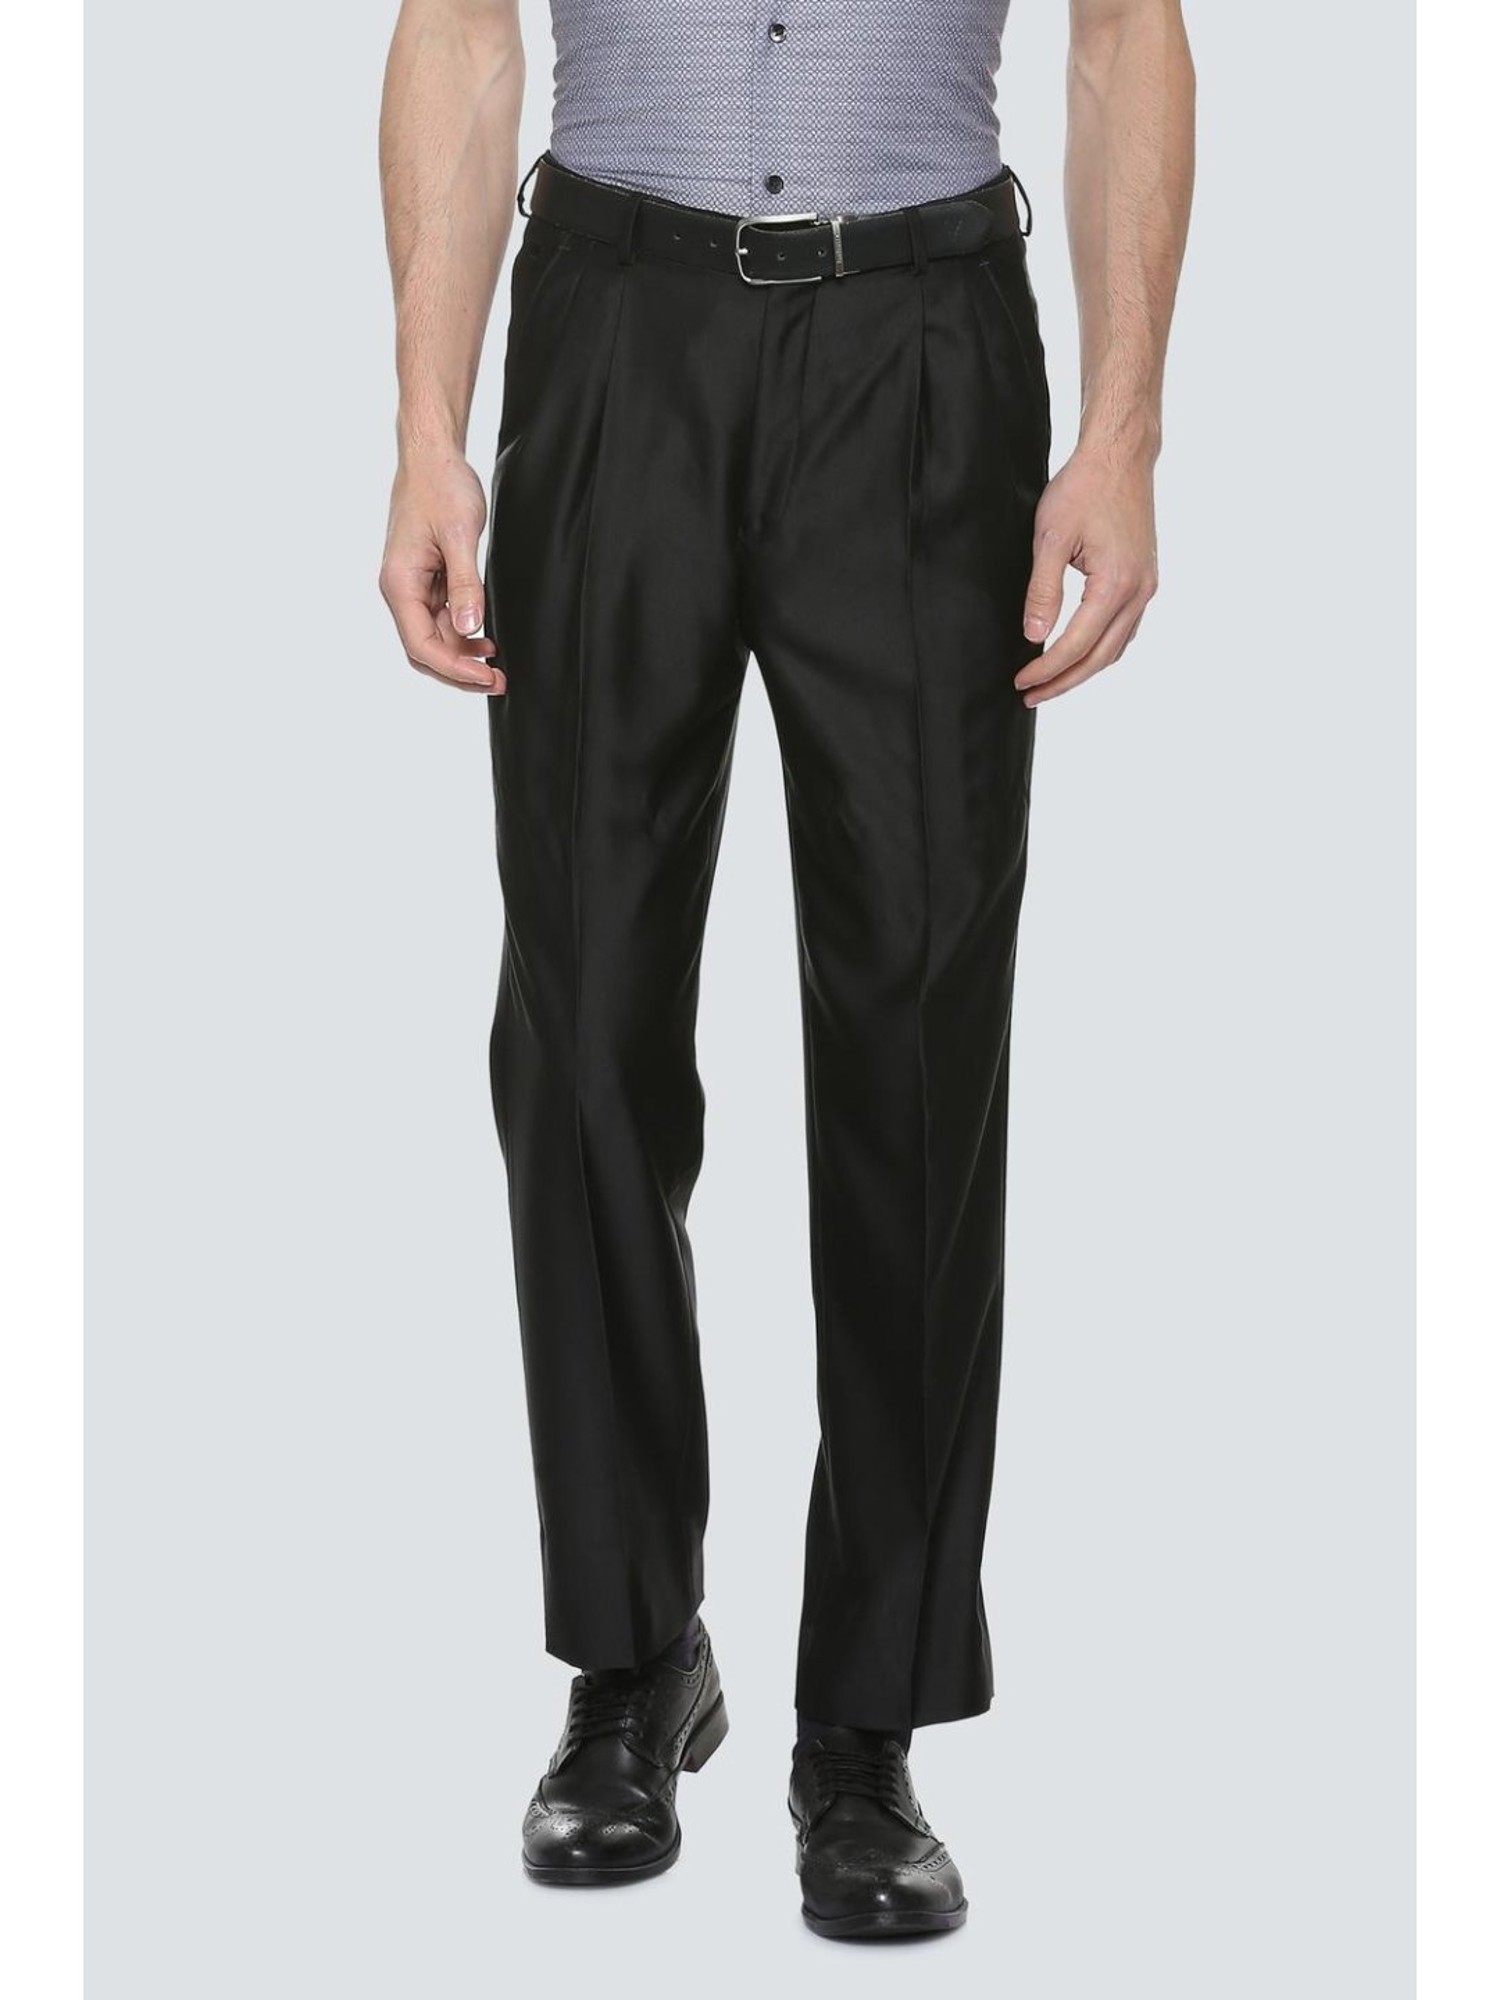 Buy Louis Philippe Grey Super slim Fit Trouser for Men Online  Tata CLiQ